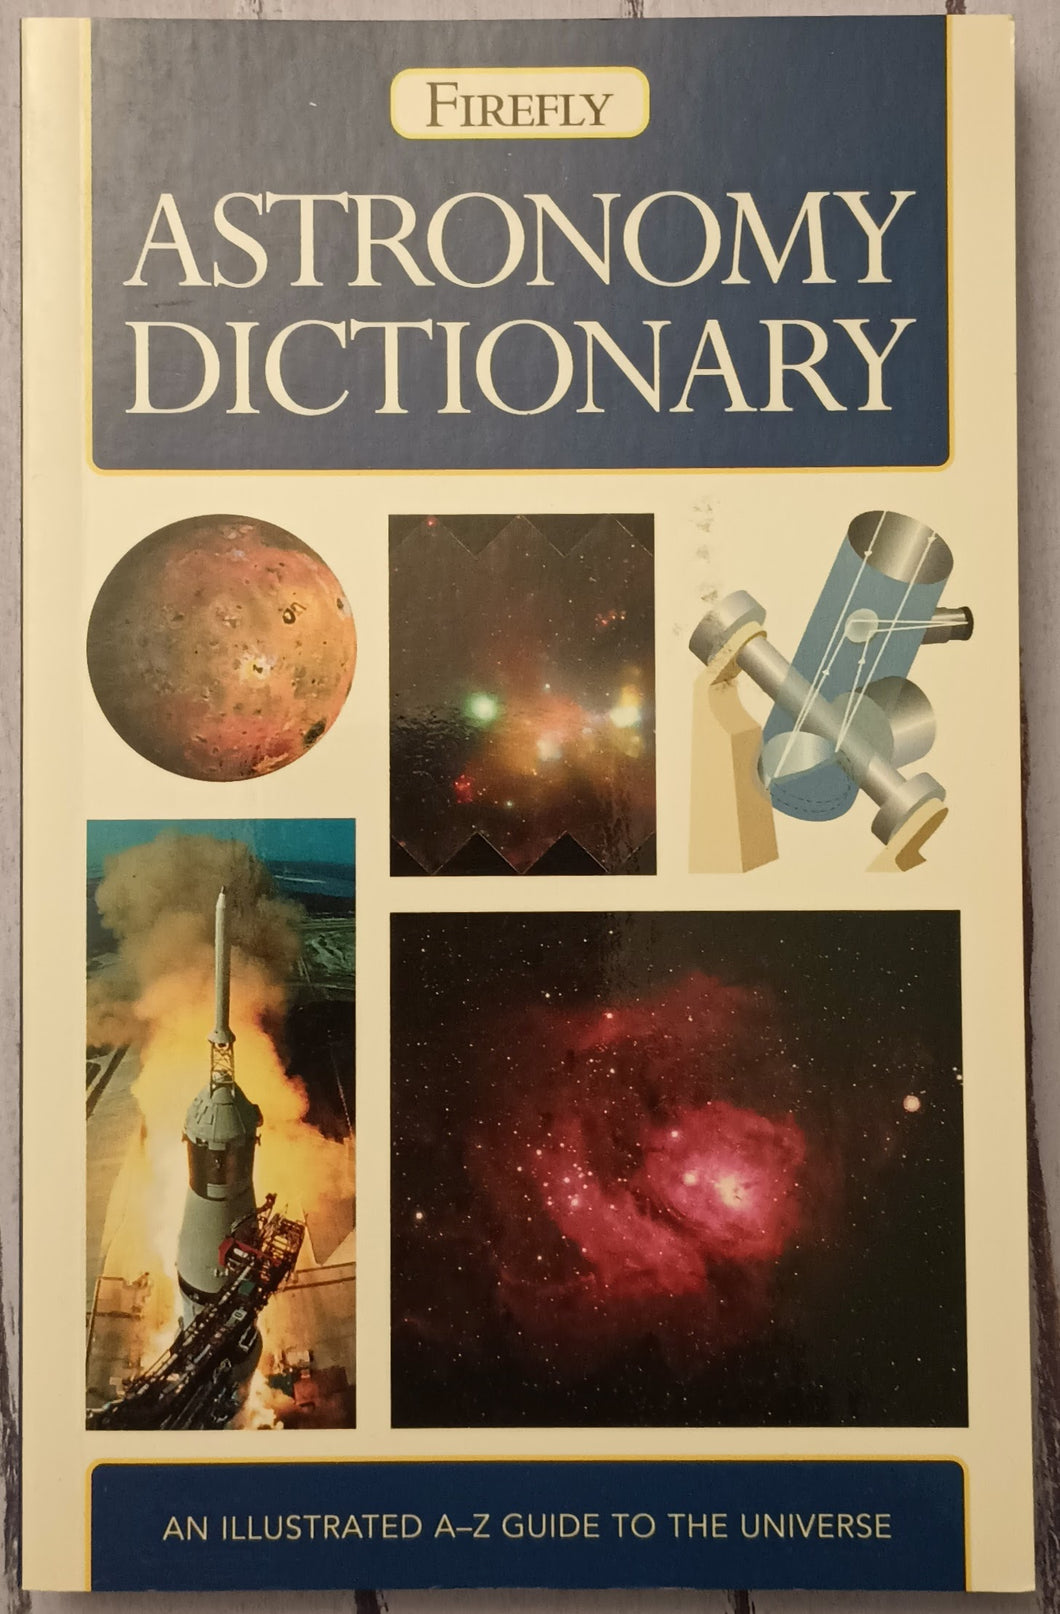 Firefly Astronomy Dictionary